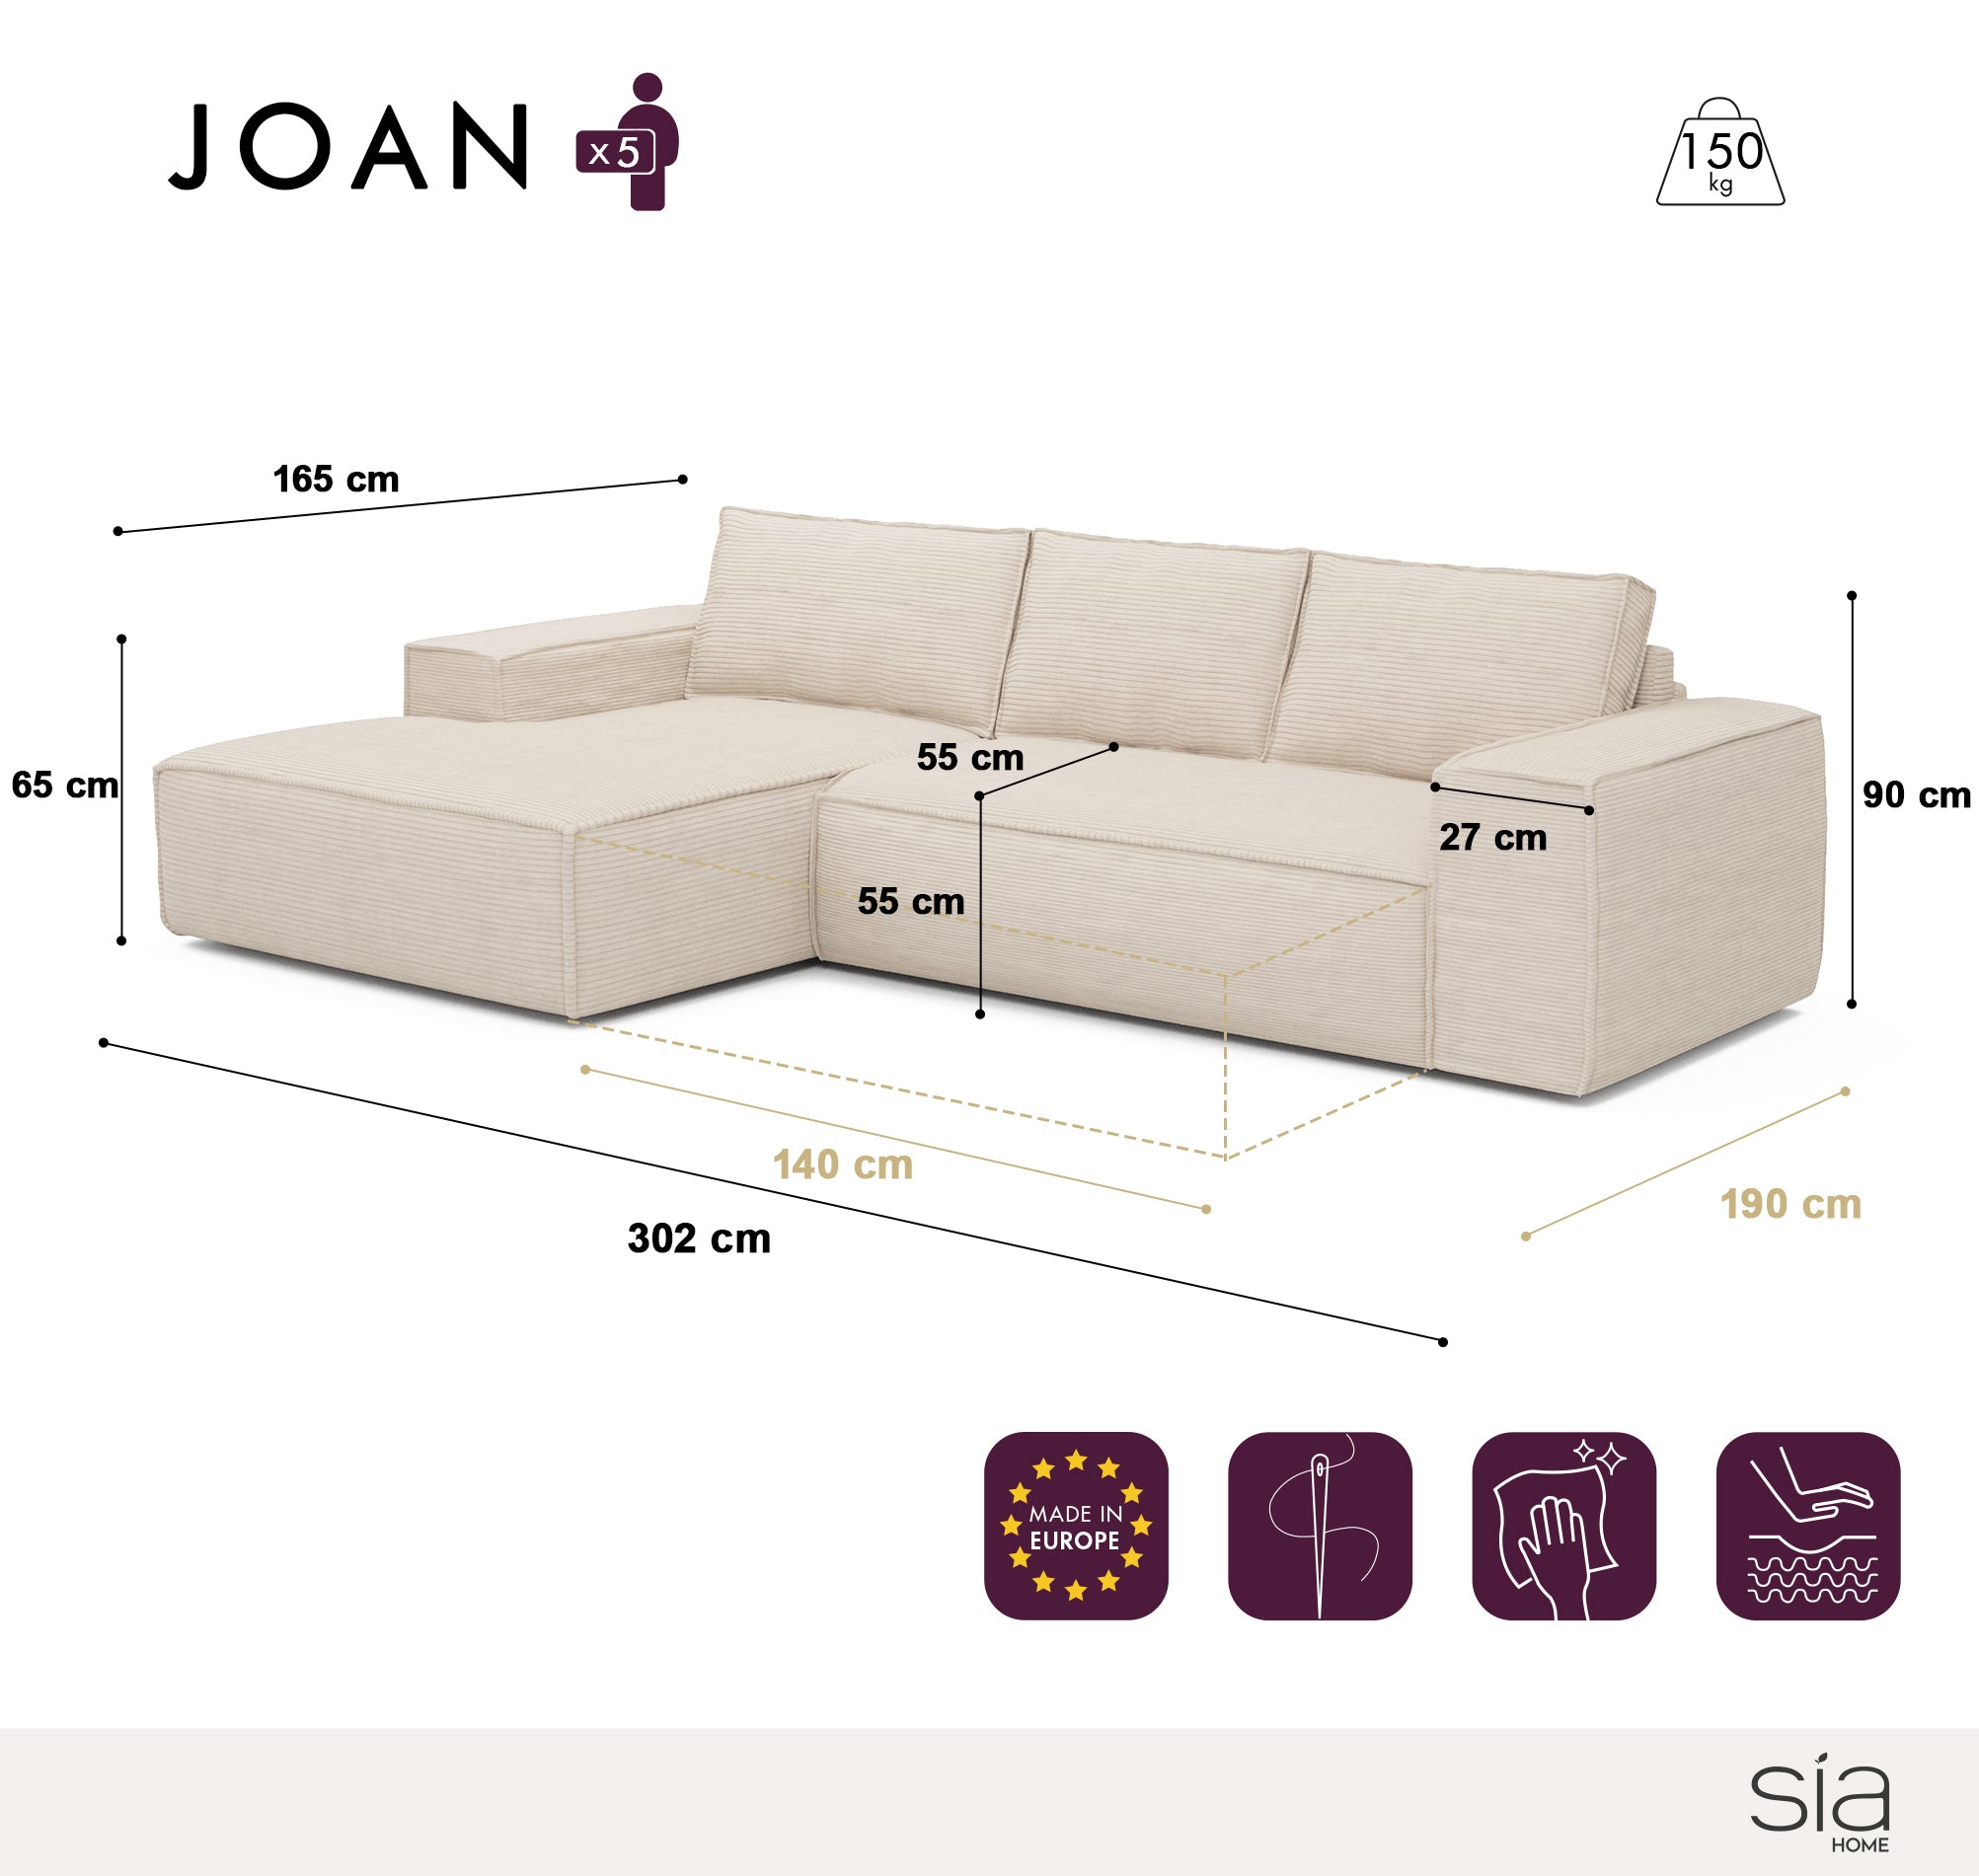 Canapé Convertible d'Angle Gauche Joan